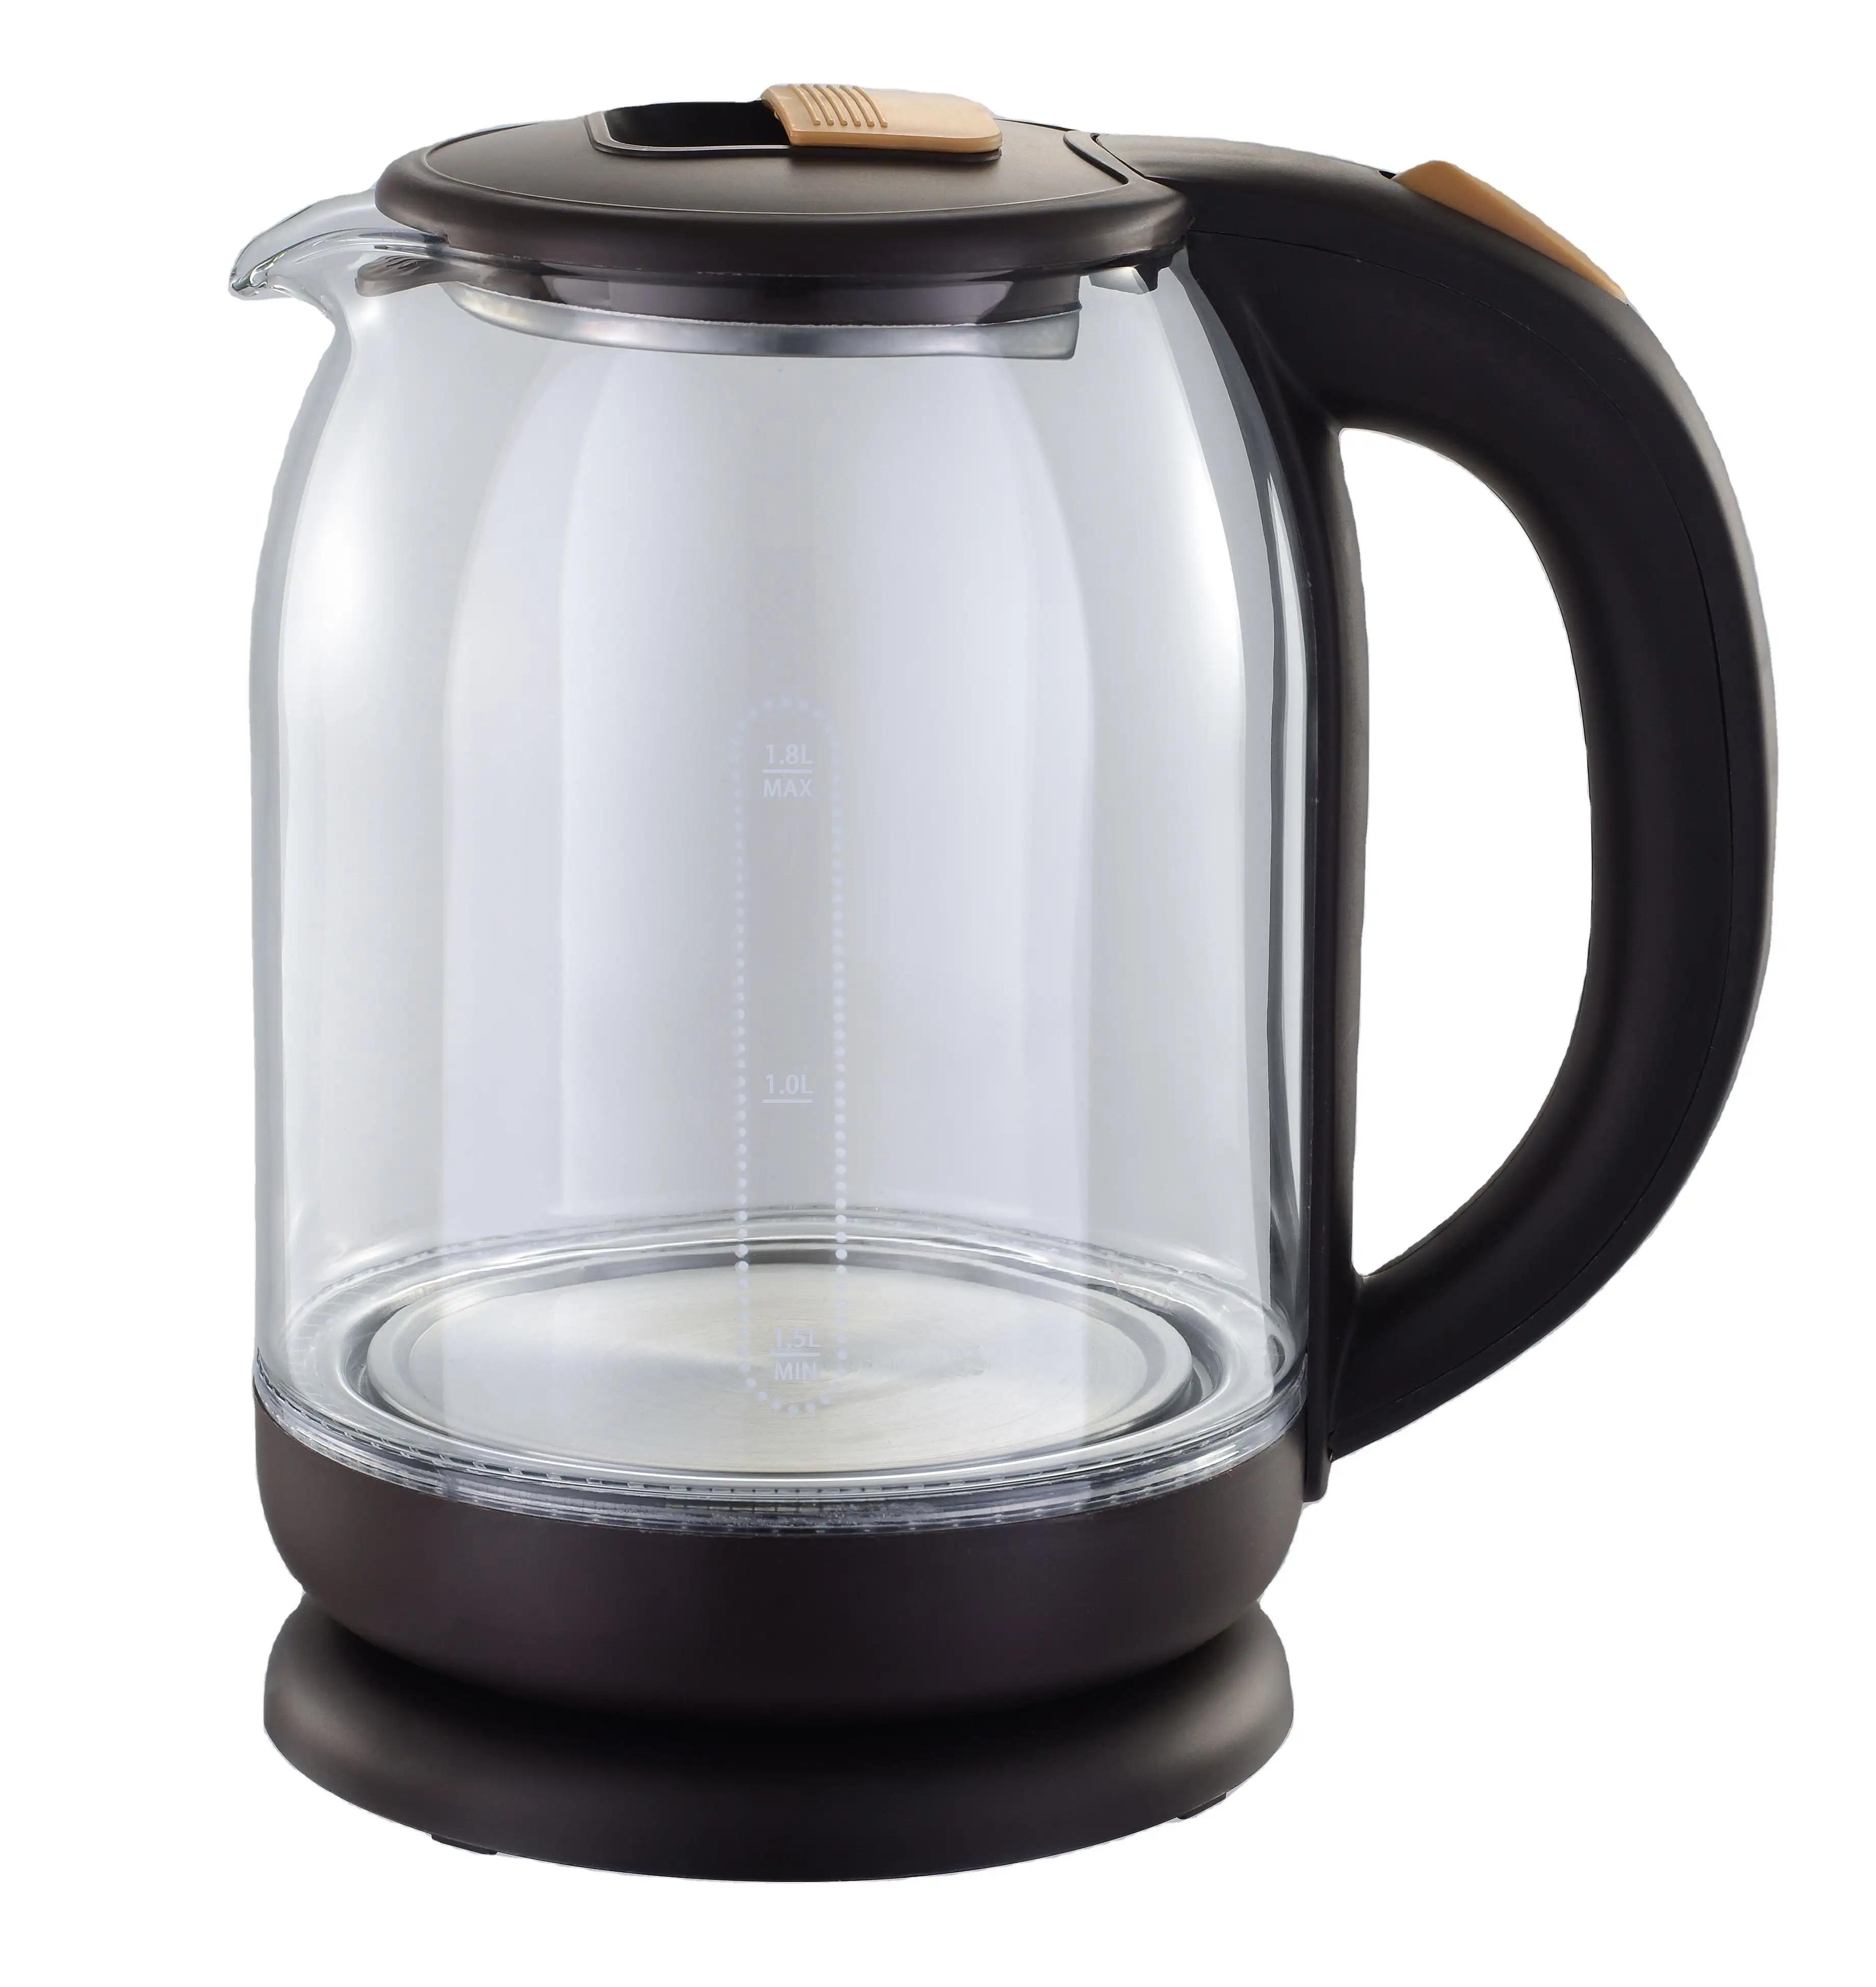 Factory Supplier Spot cordless kettle 1.8L Kettle and teapot Milk boiler coffee teapot glass electric kettle